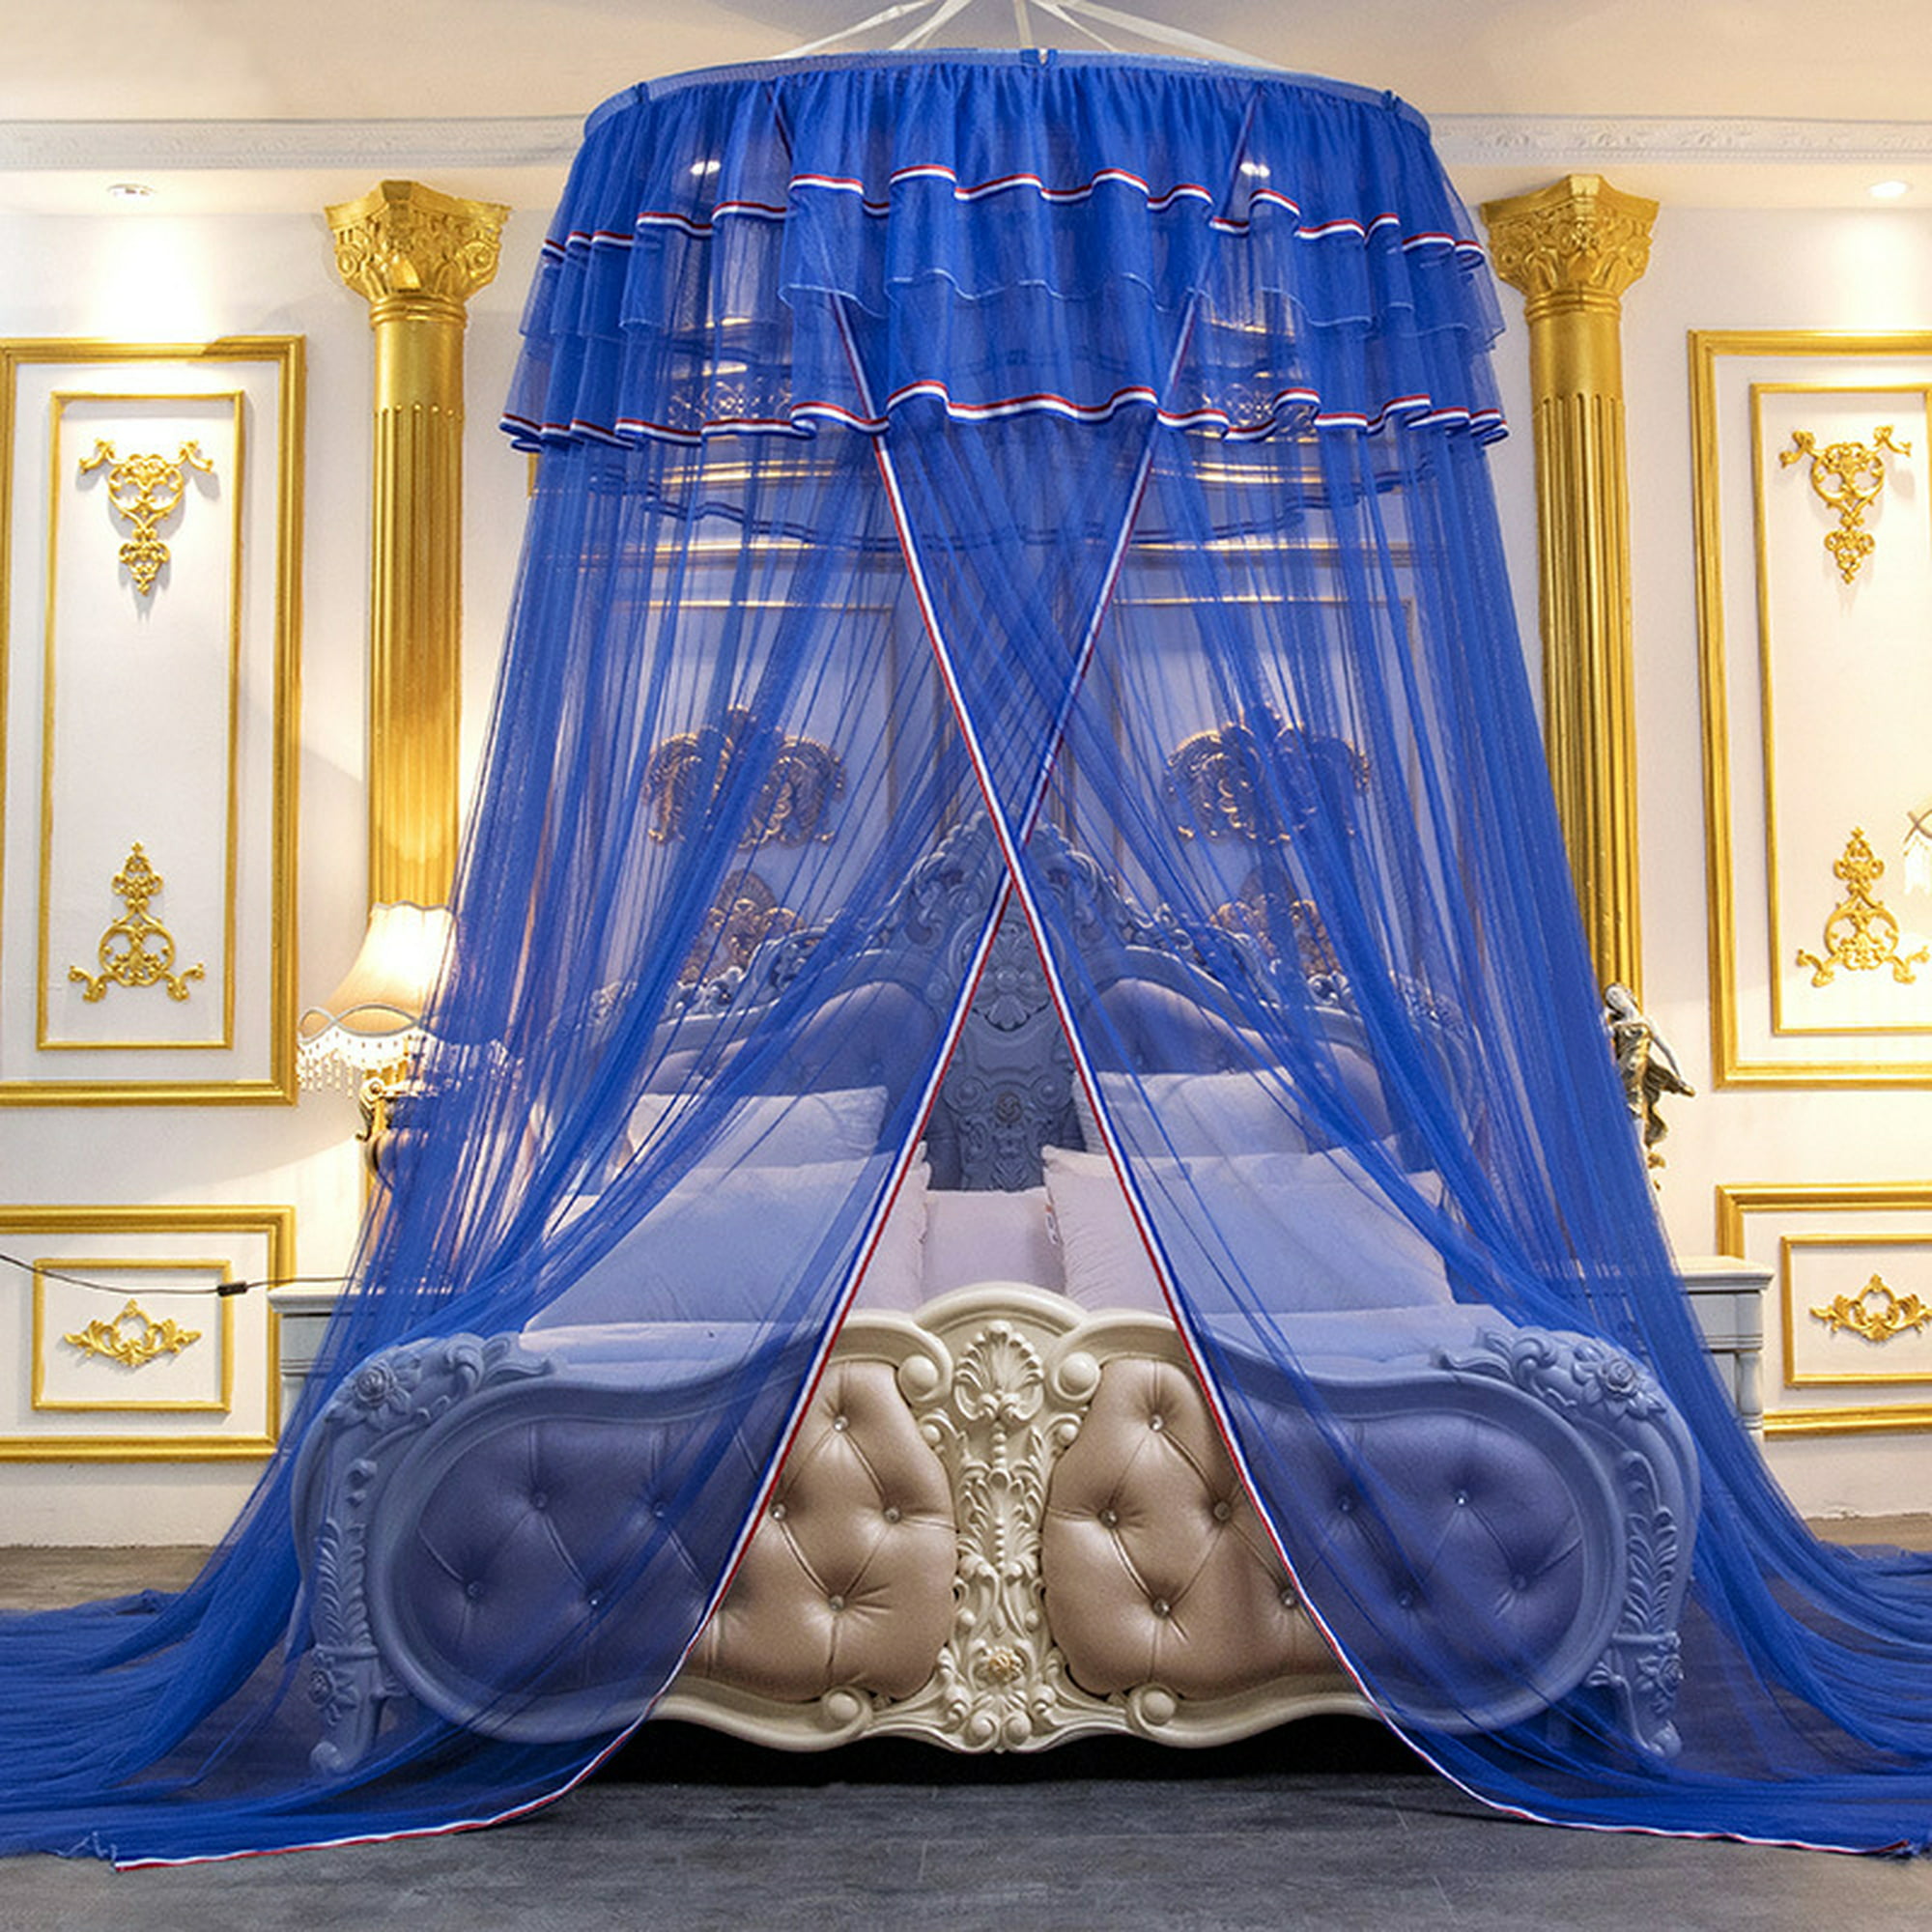 Mengersi - Dosel de cama para niñas, cortinas de cama, toldo de cama de  princesa, regalo de cumpleaños, decoración de habitación de niñas, morado